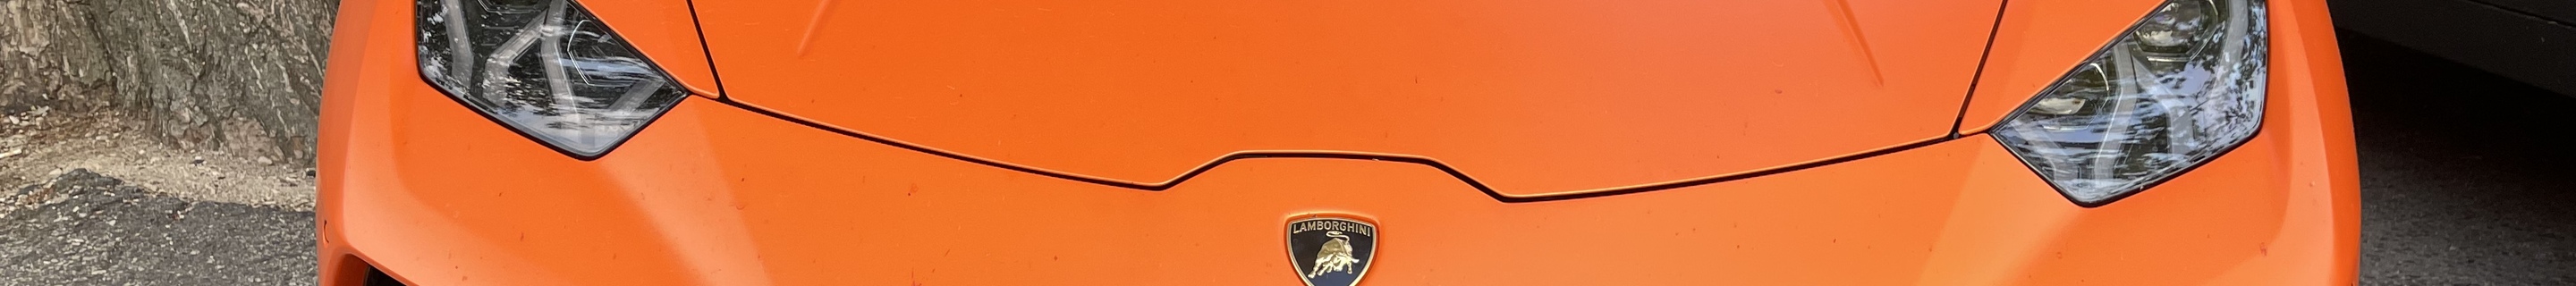 Lamborghini Huracán LP640-4 Performante